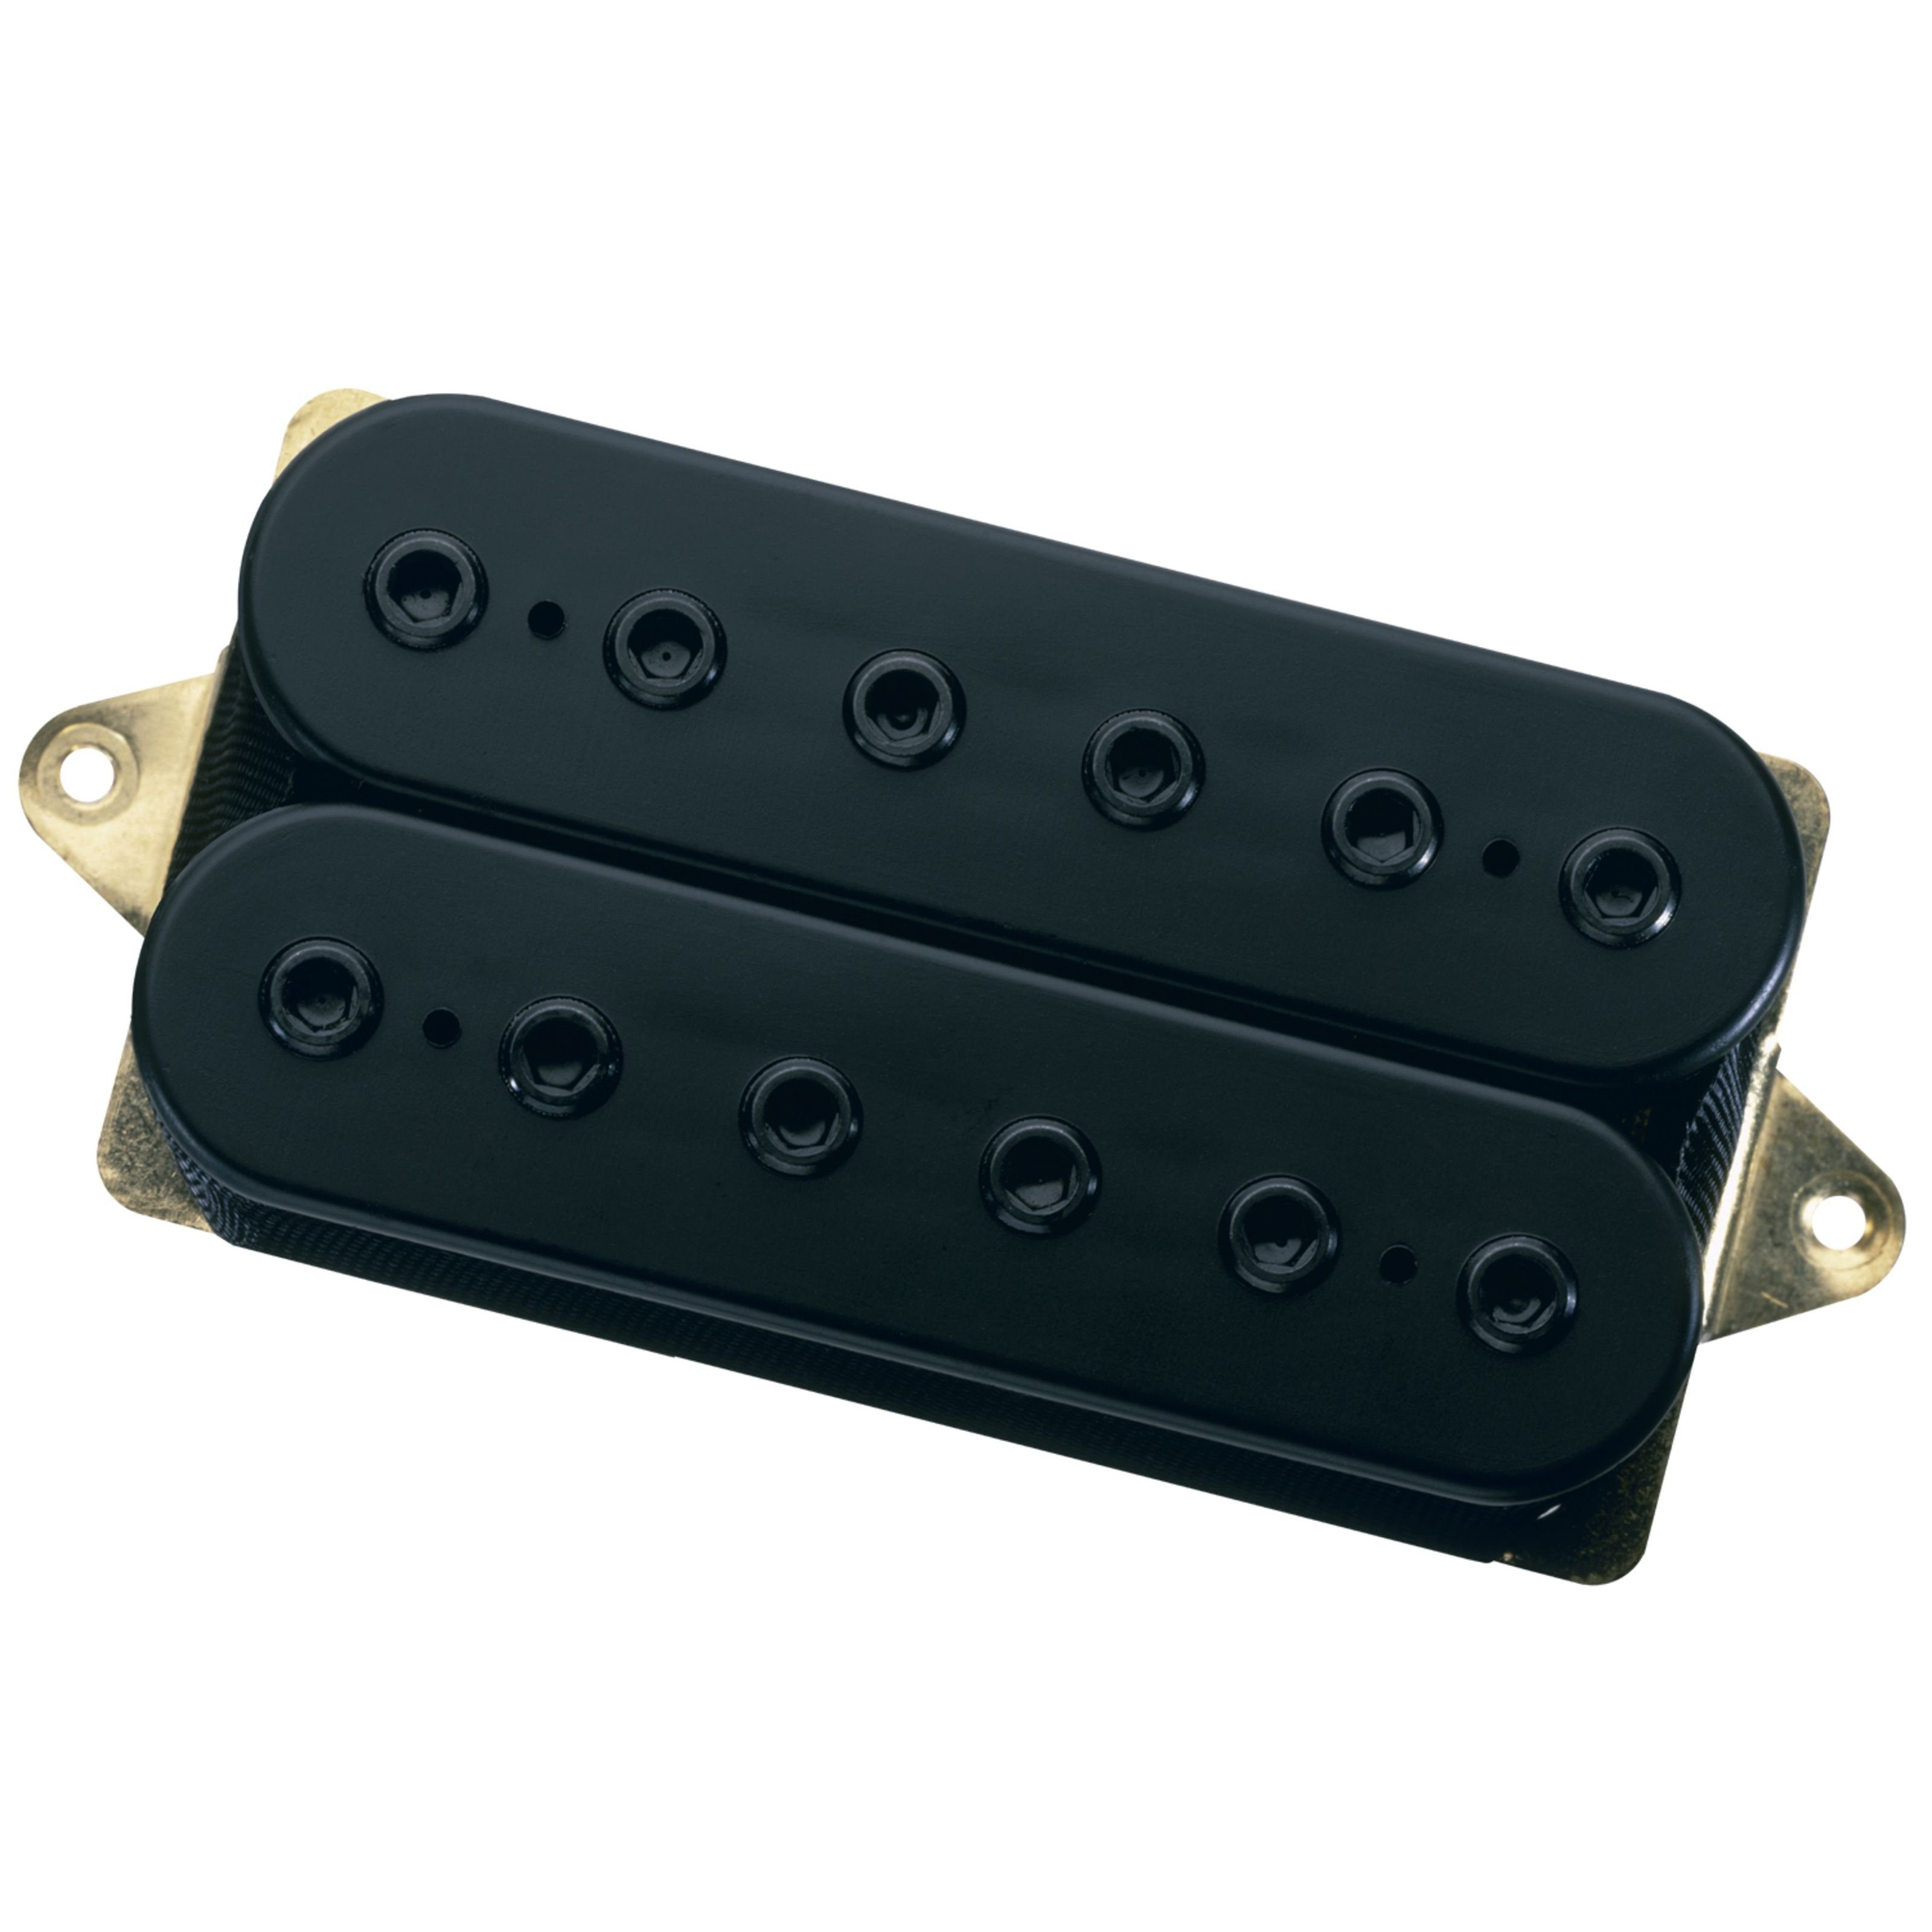 DiMarzio Tonabnehmer, (DP151 PAF Pro Black, E-Gitarre Tonabnehmer, Humbucker), DP151 PAF Pro Black - Humbucker Tonabnehmer für Gitarren